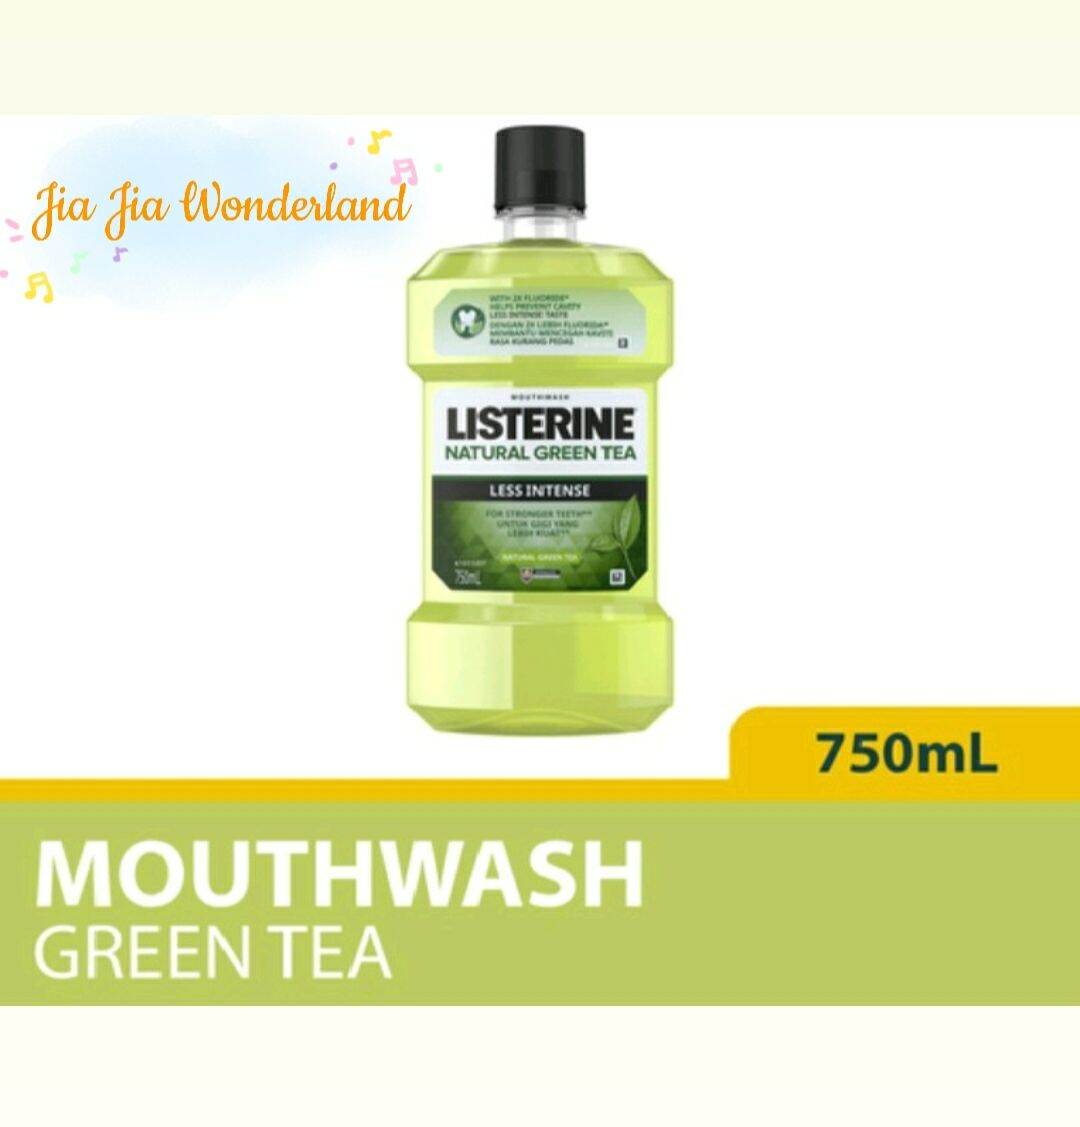 Listerine Mouthwash Green Tea Less Intense (750ml)